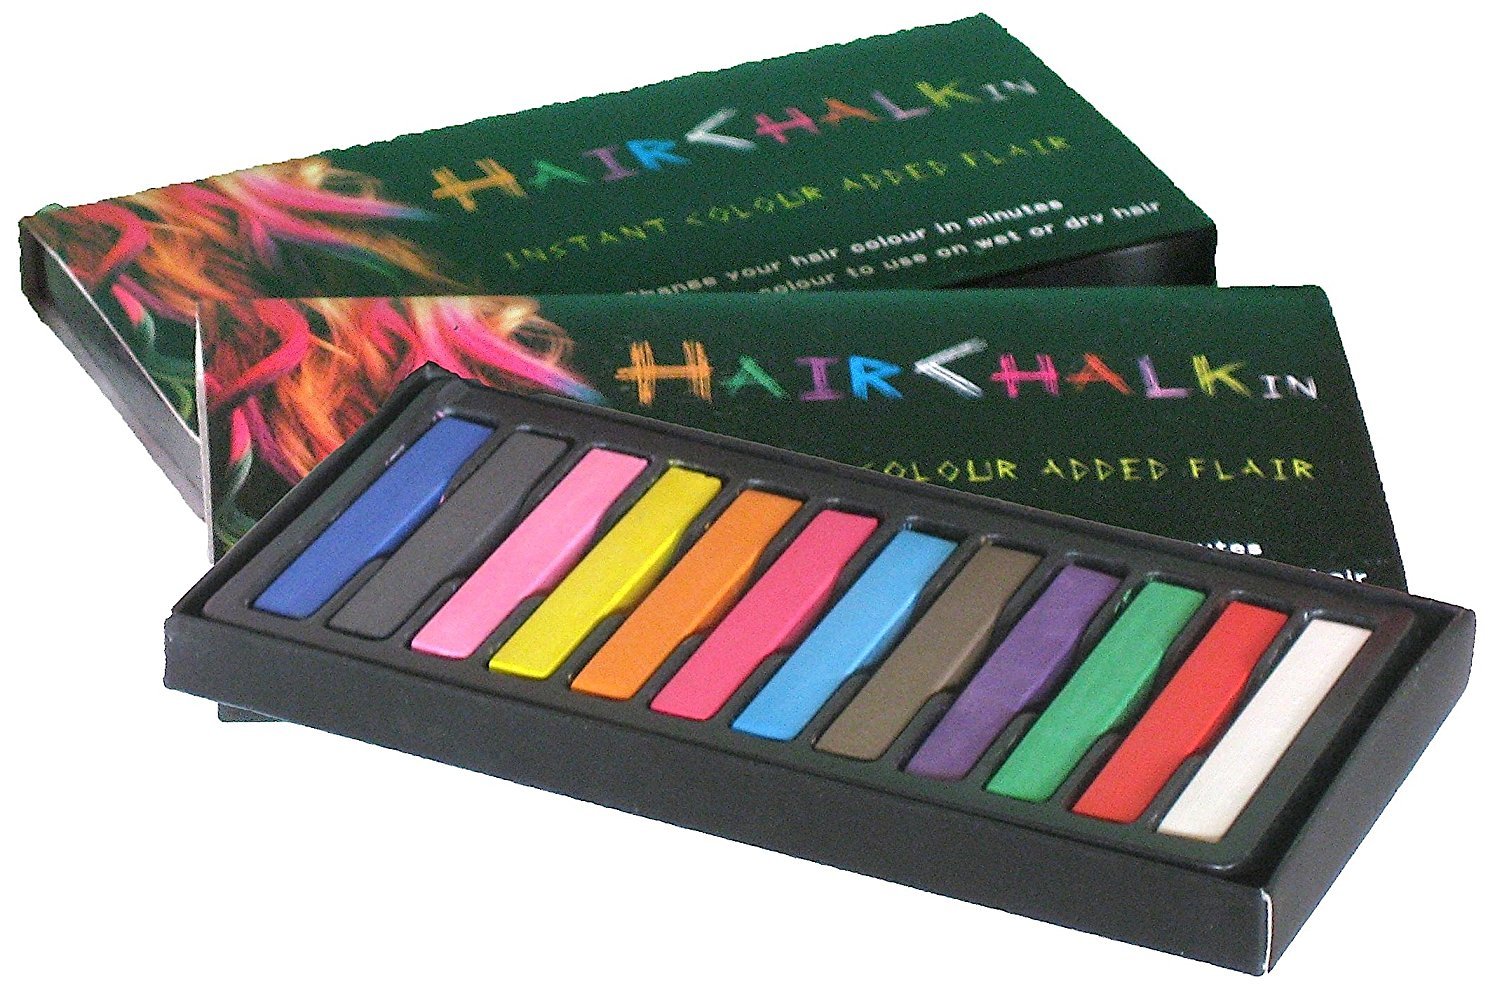 Hair Chalkin 選べる 12色 髪専用に開発された安心商品 ヘアチョーク ヘアカラー 割引購入